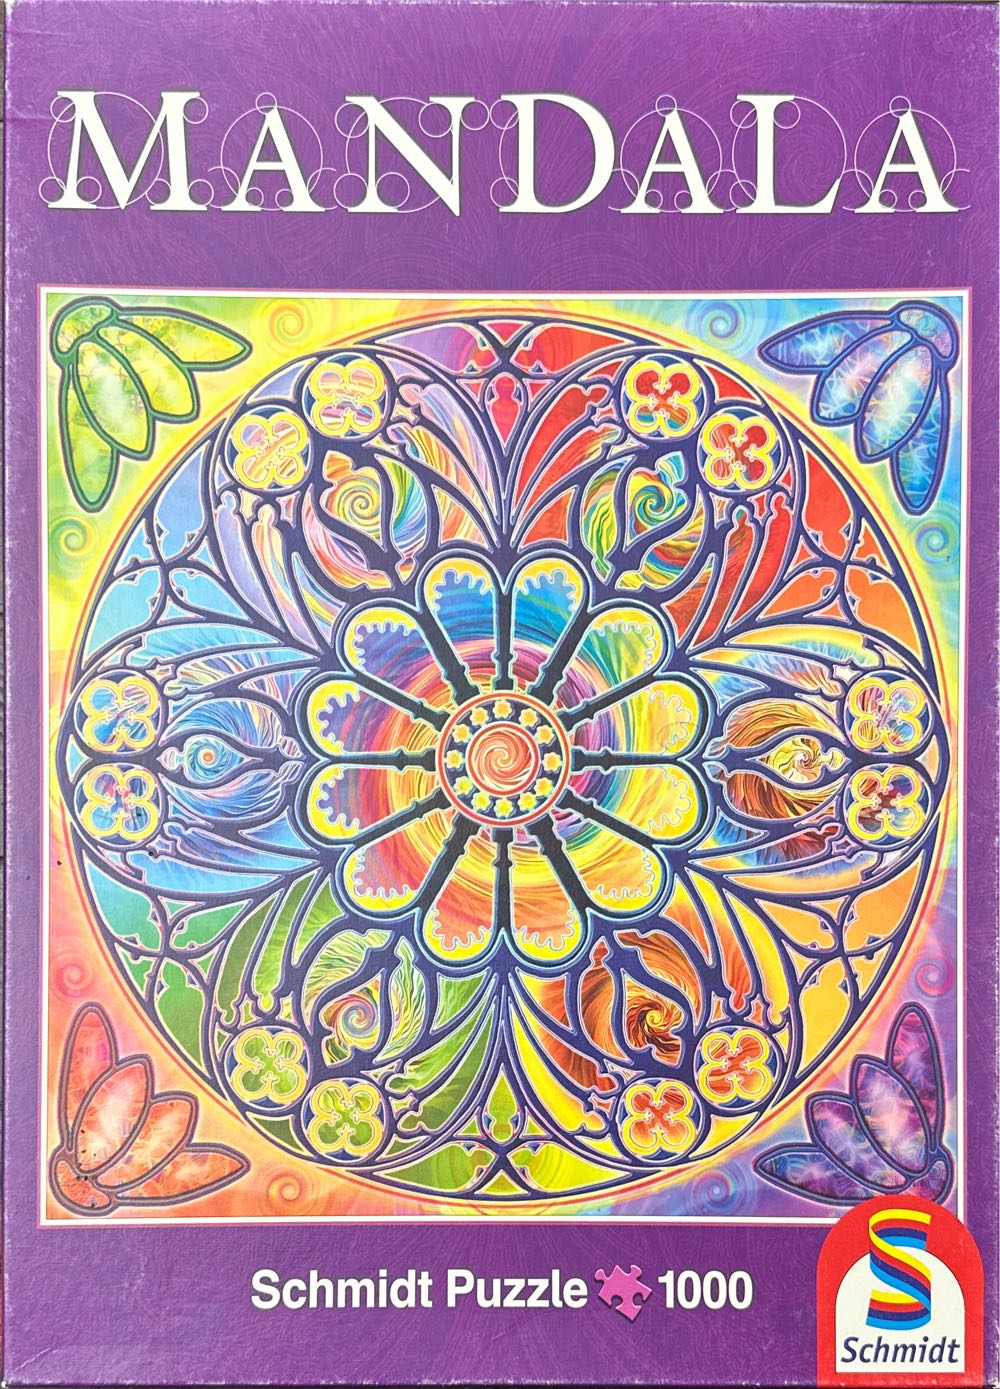 Mandala - Ornament - Schmidt puzzle collectible [Barcode 4001504592035] - Main Image 1